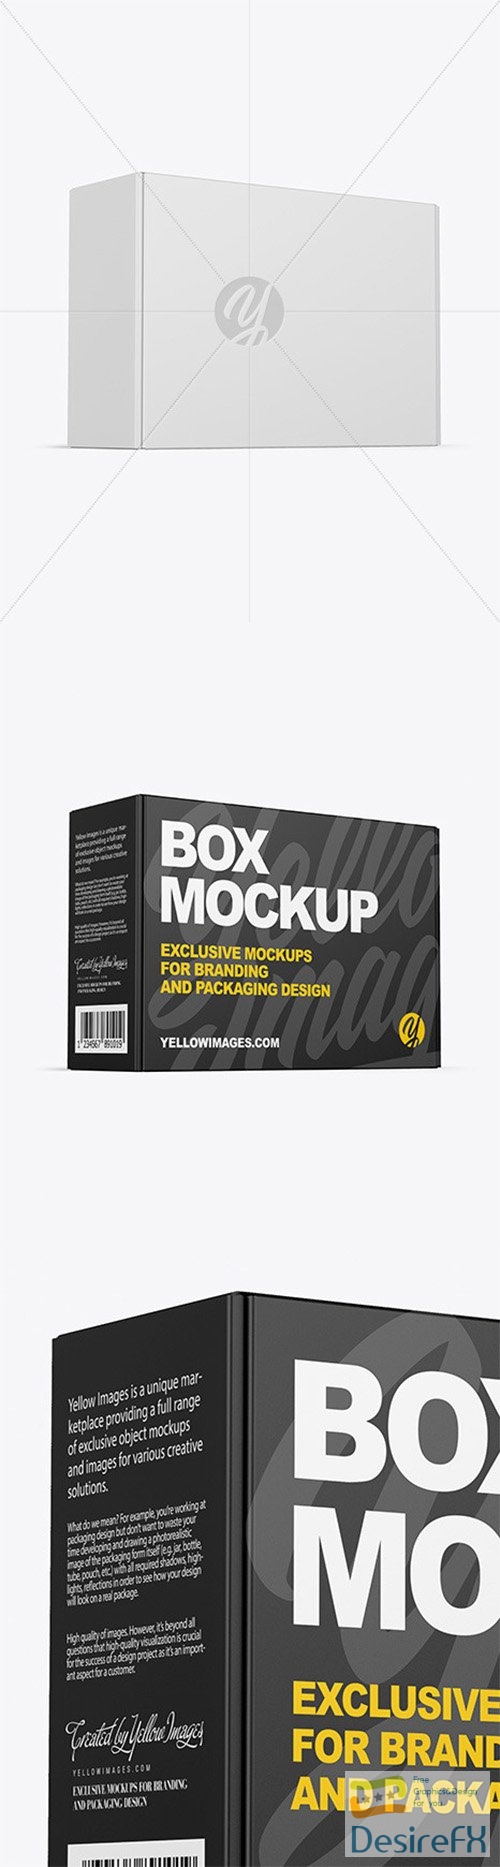 Paper Box Mockup 54457 TIF